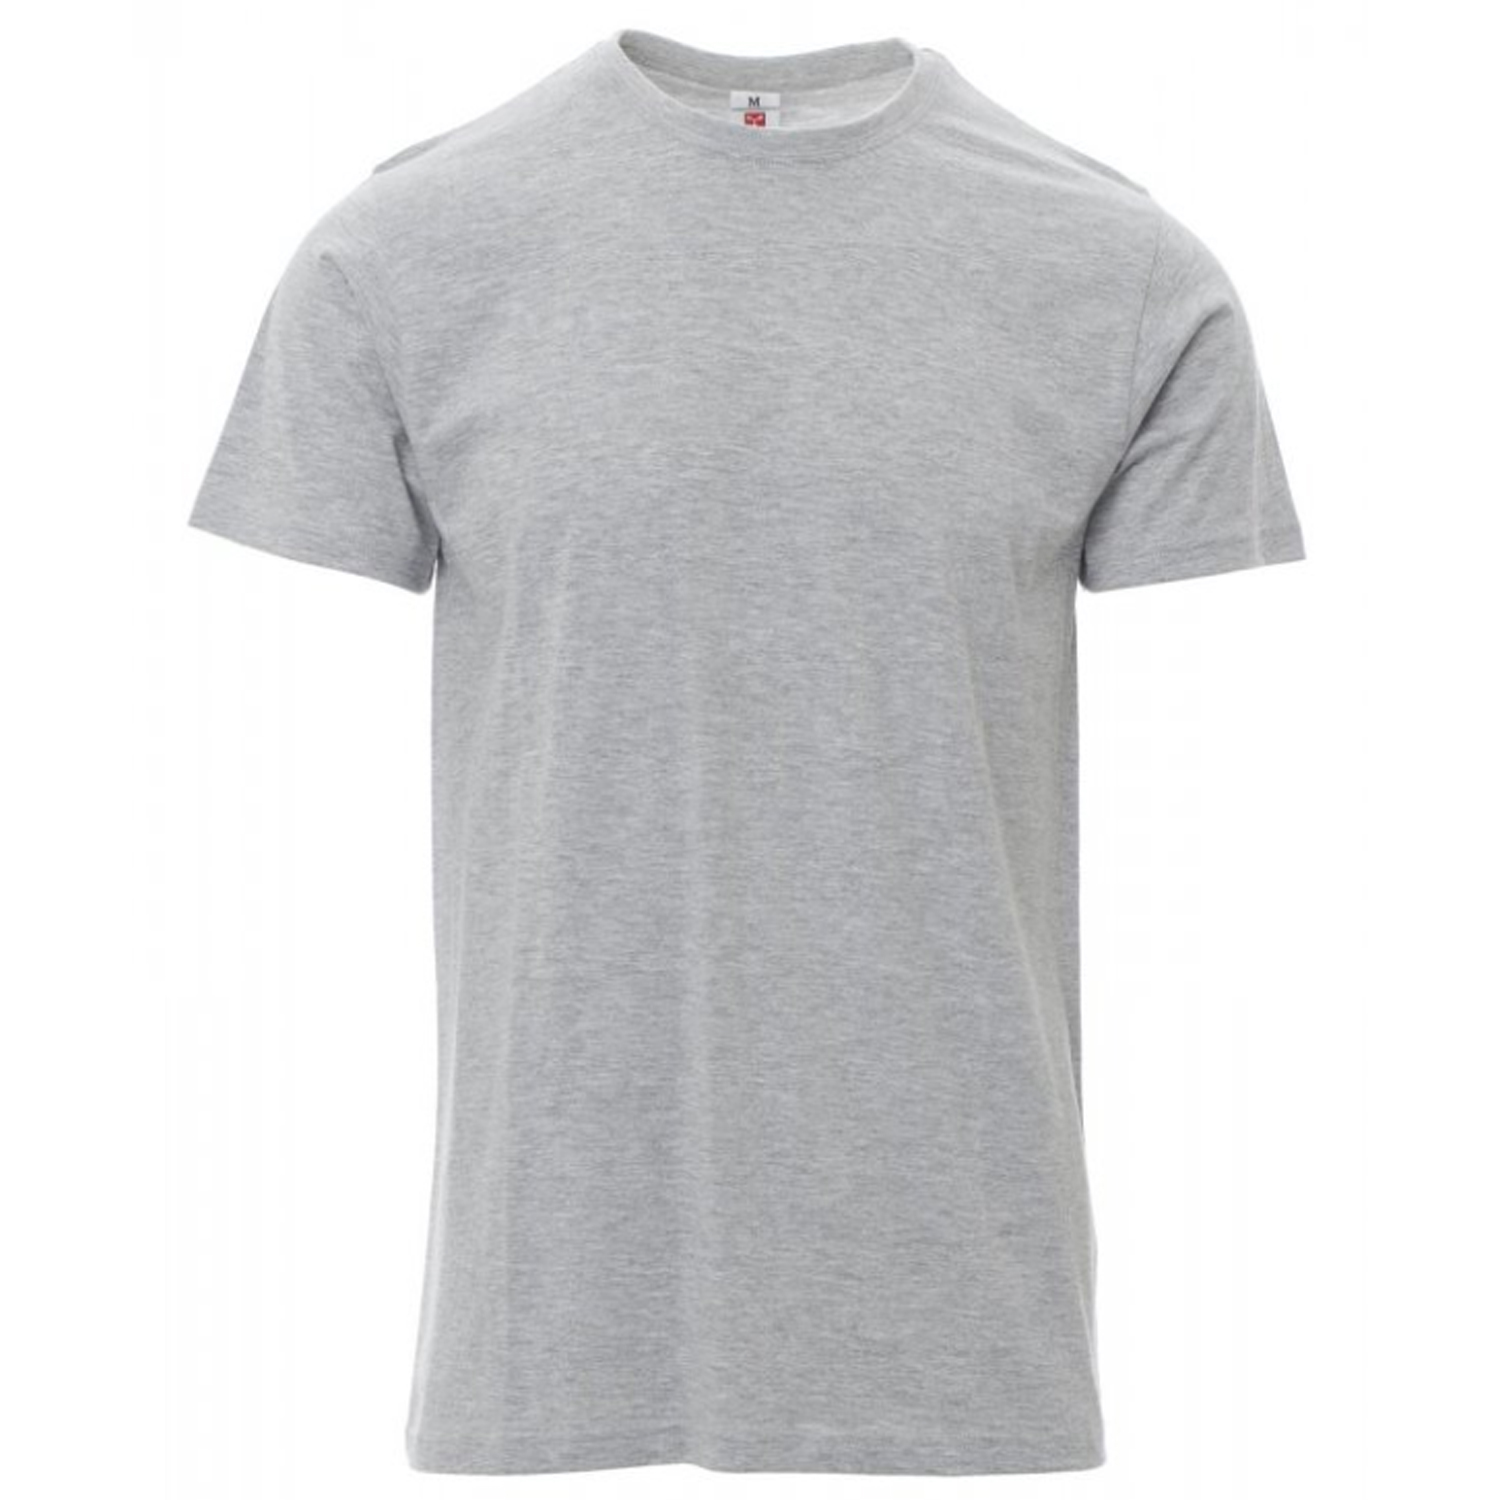 Print T-shirt Melange Grey Size L